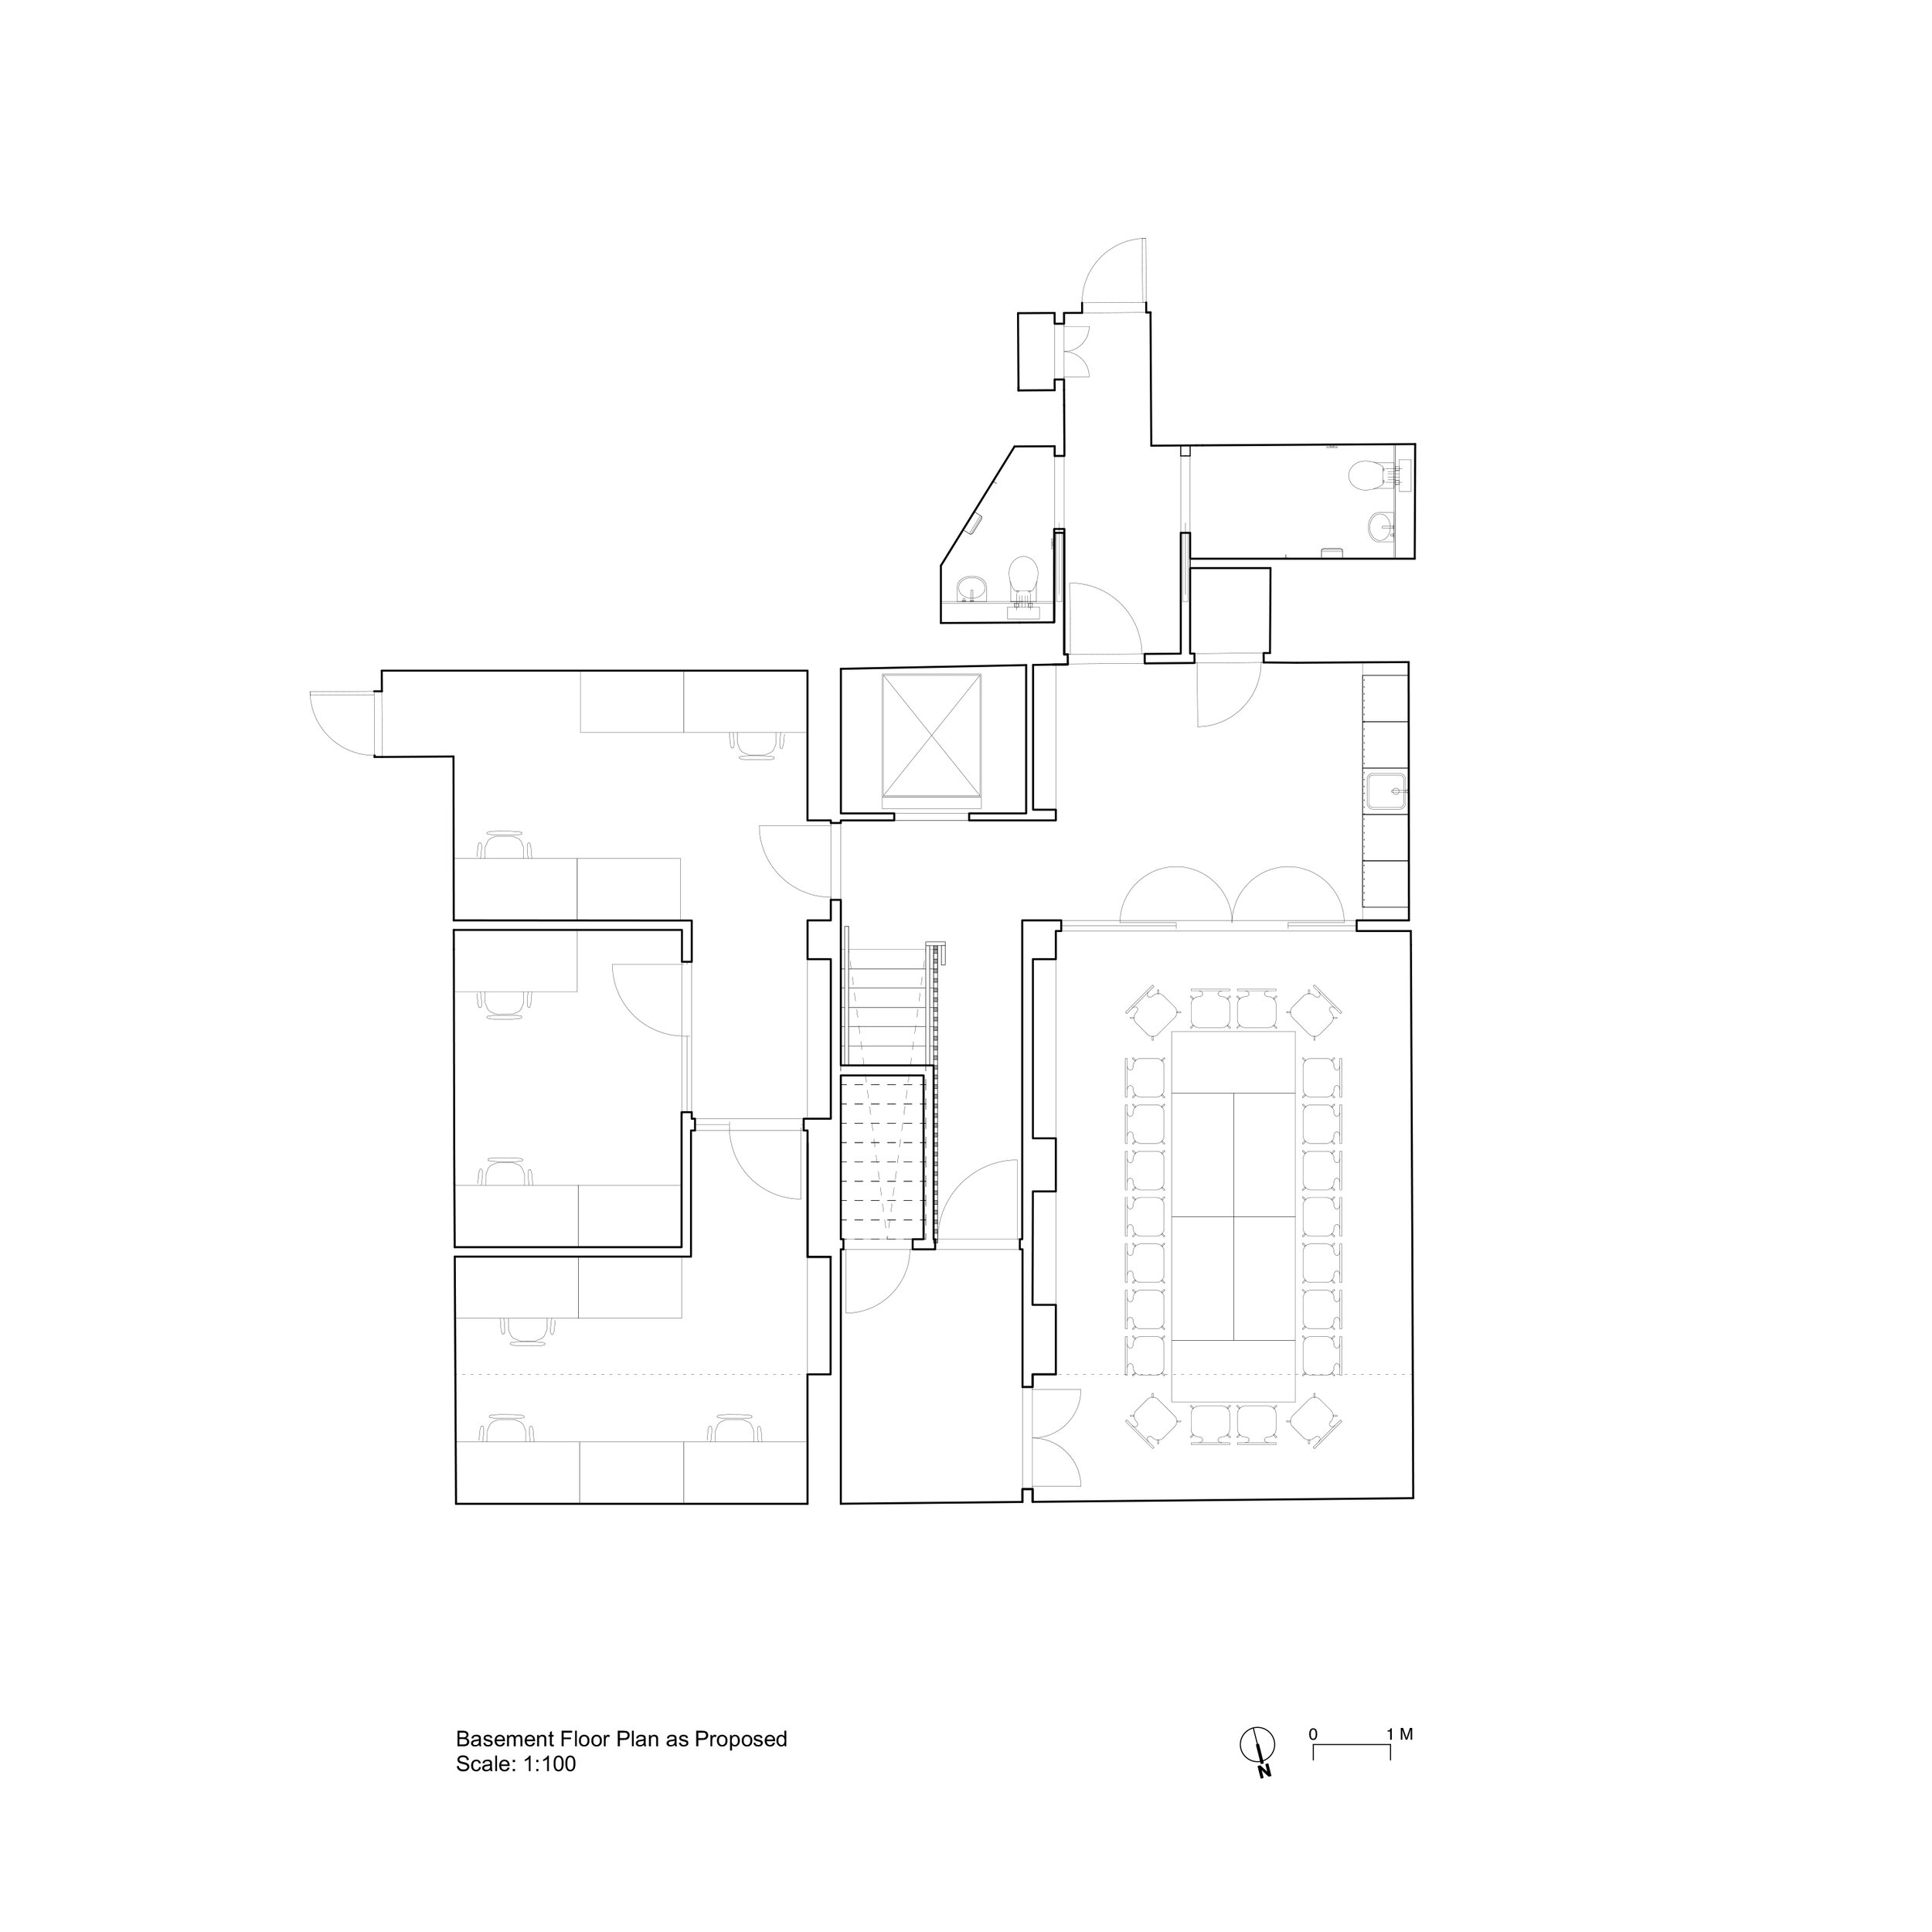 CSG-AM(00)100-Basement floor plan as proposed.jpg